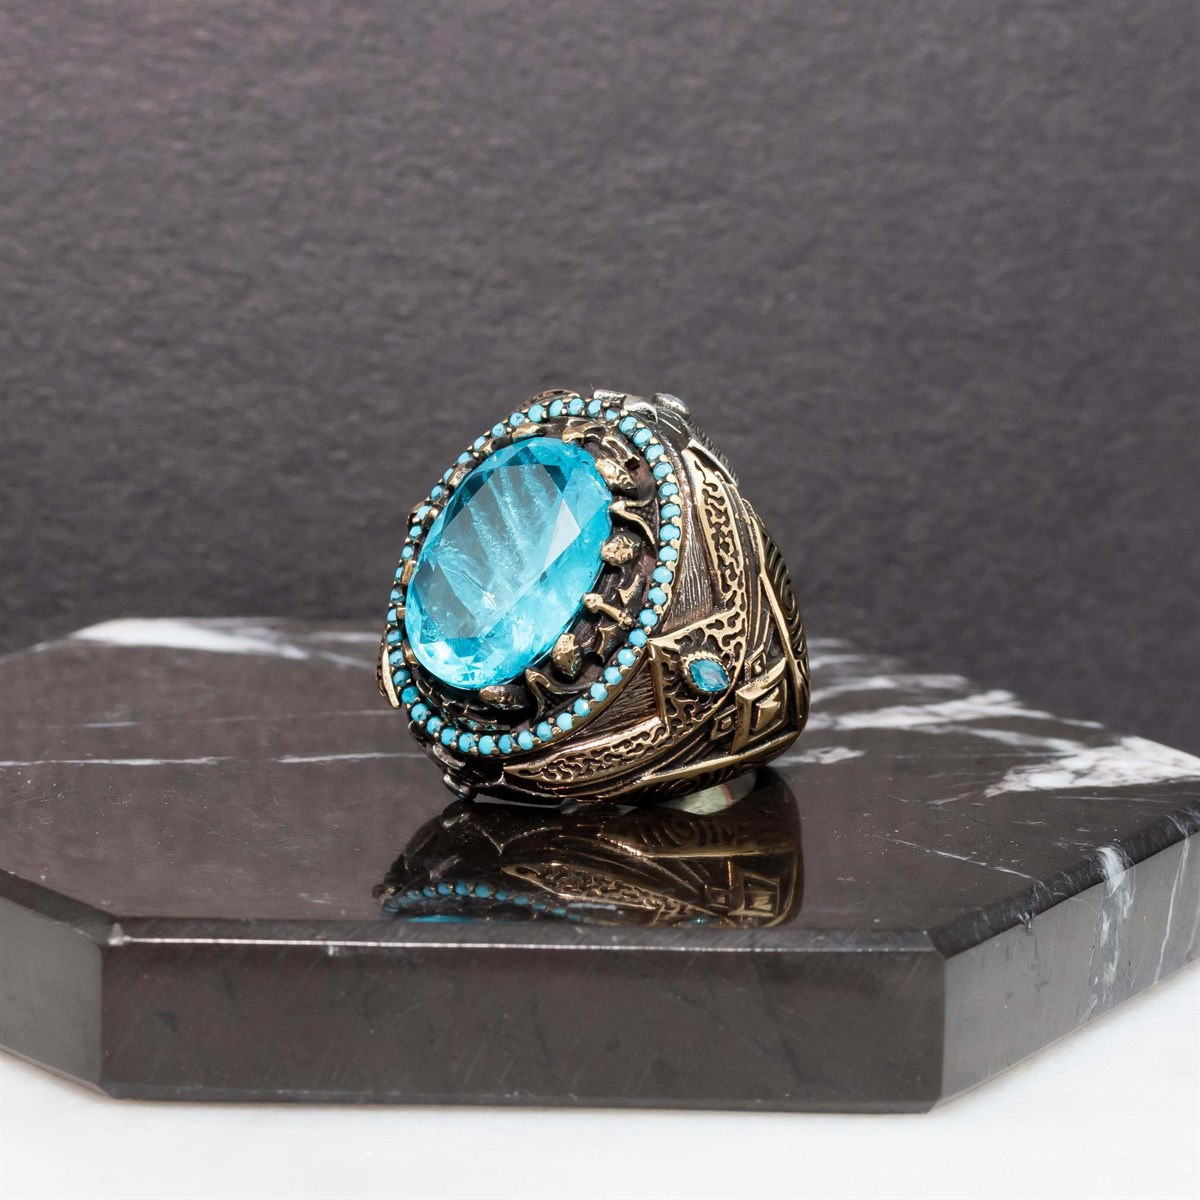 Aqua Quartz Stone Turquoise Decorated Blackened Sterling Silver Men's Ring